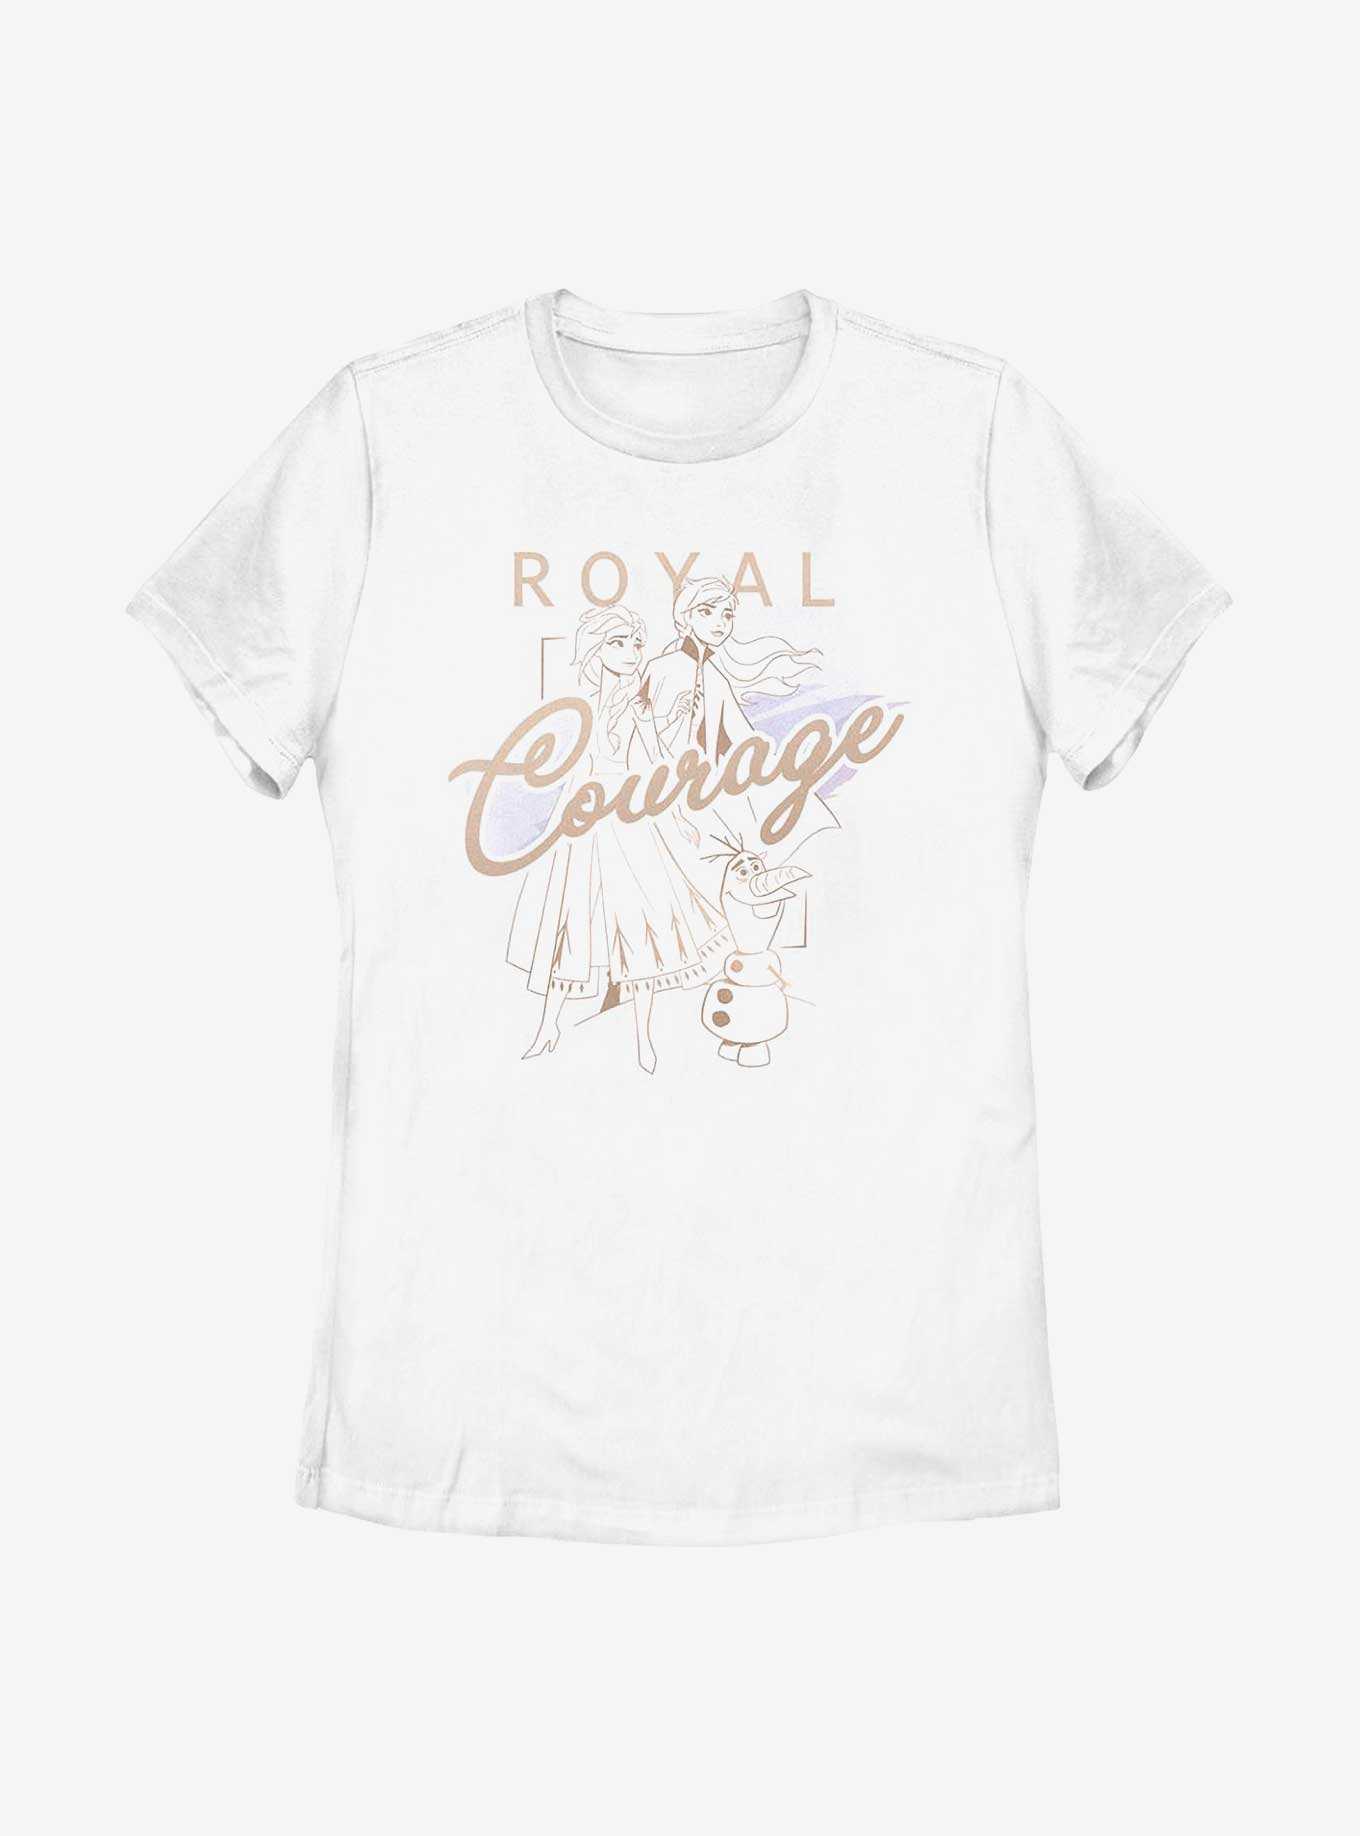 Disney Frozen Royal Courage Womens T-Shirt, , hi-res